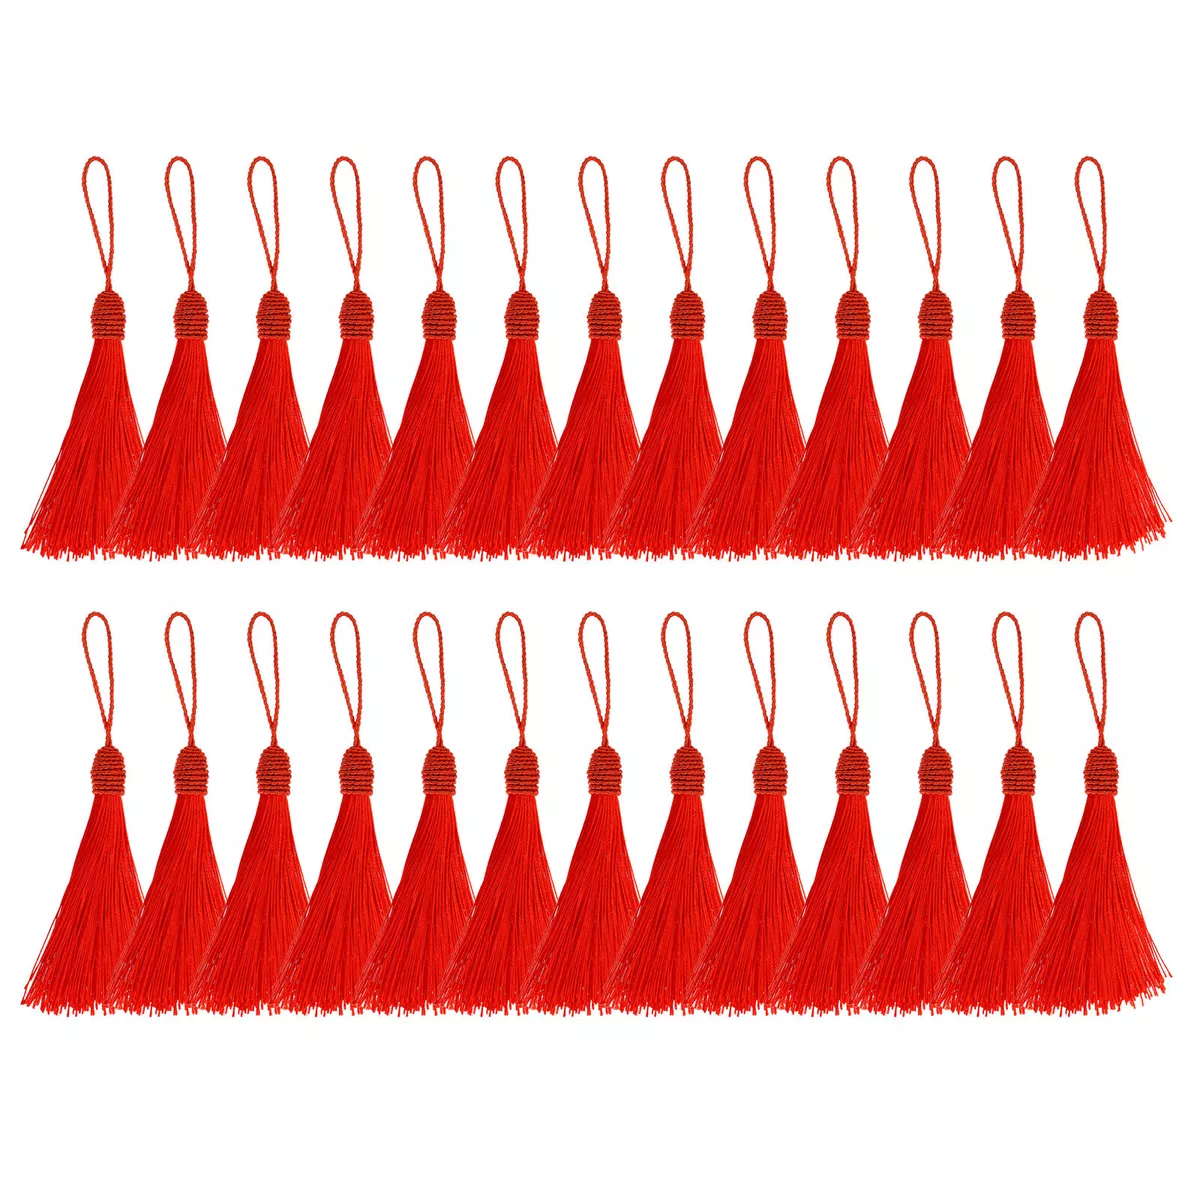 25pcs 14cm/5.5 Inch Bookmark Tassels Soft Silky Cord Loop Craft Tassels Red